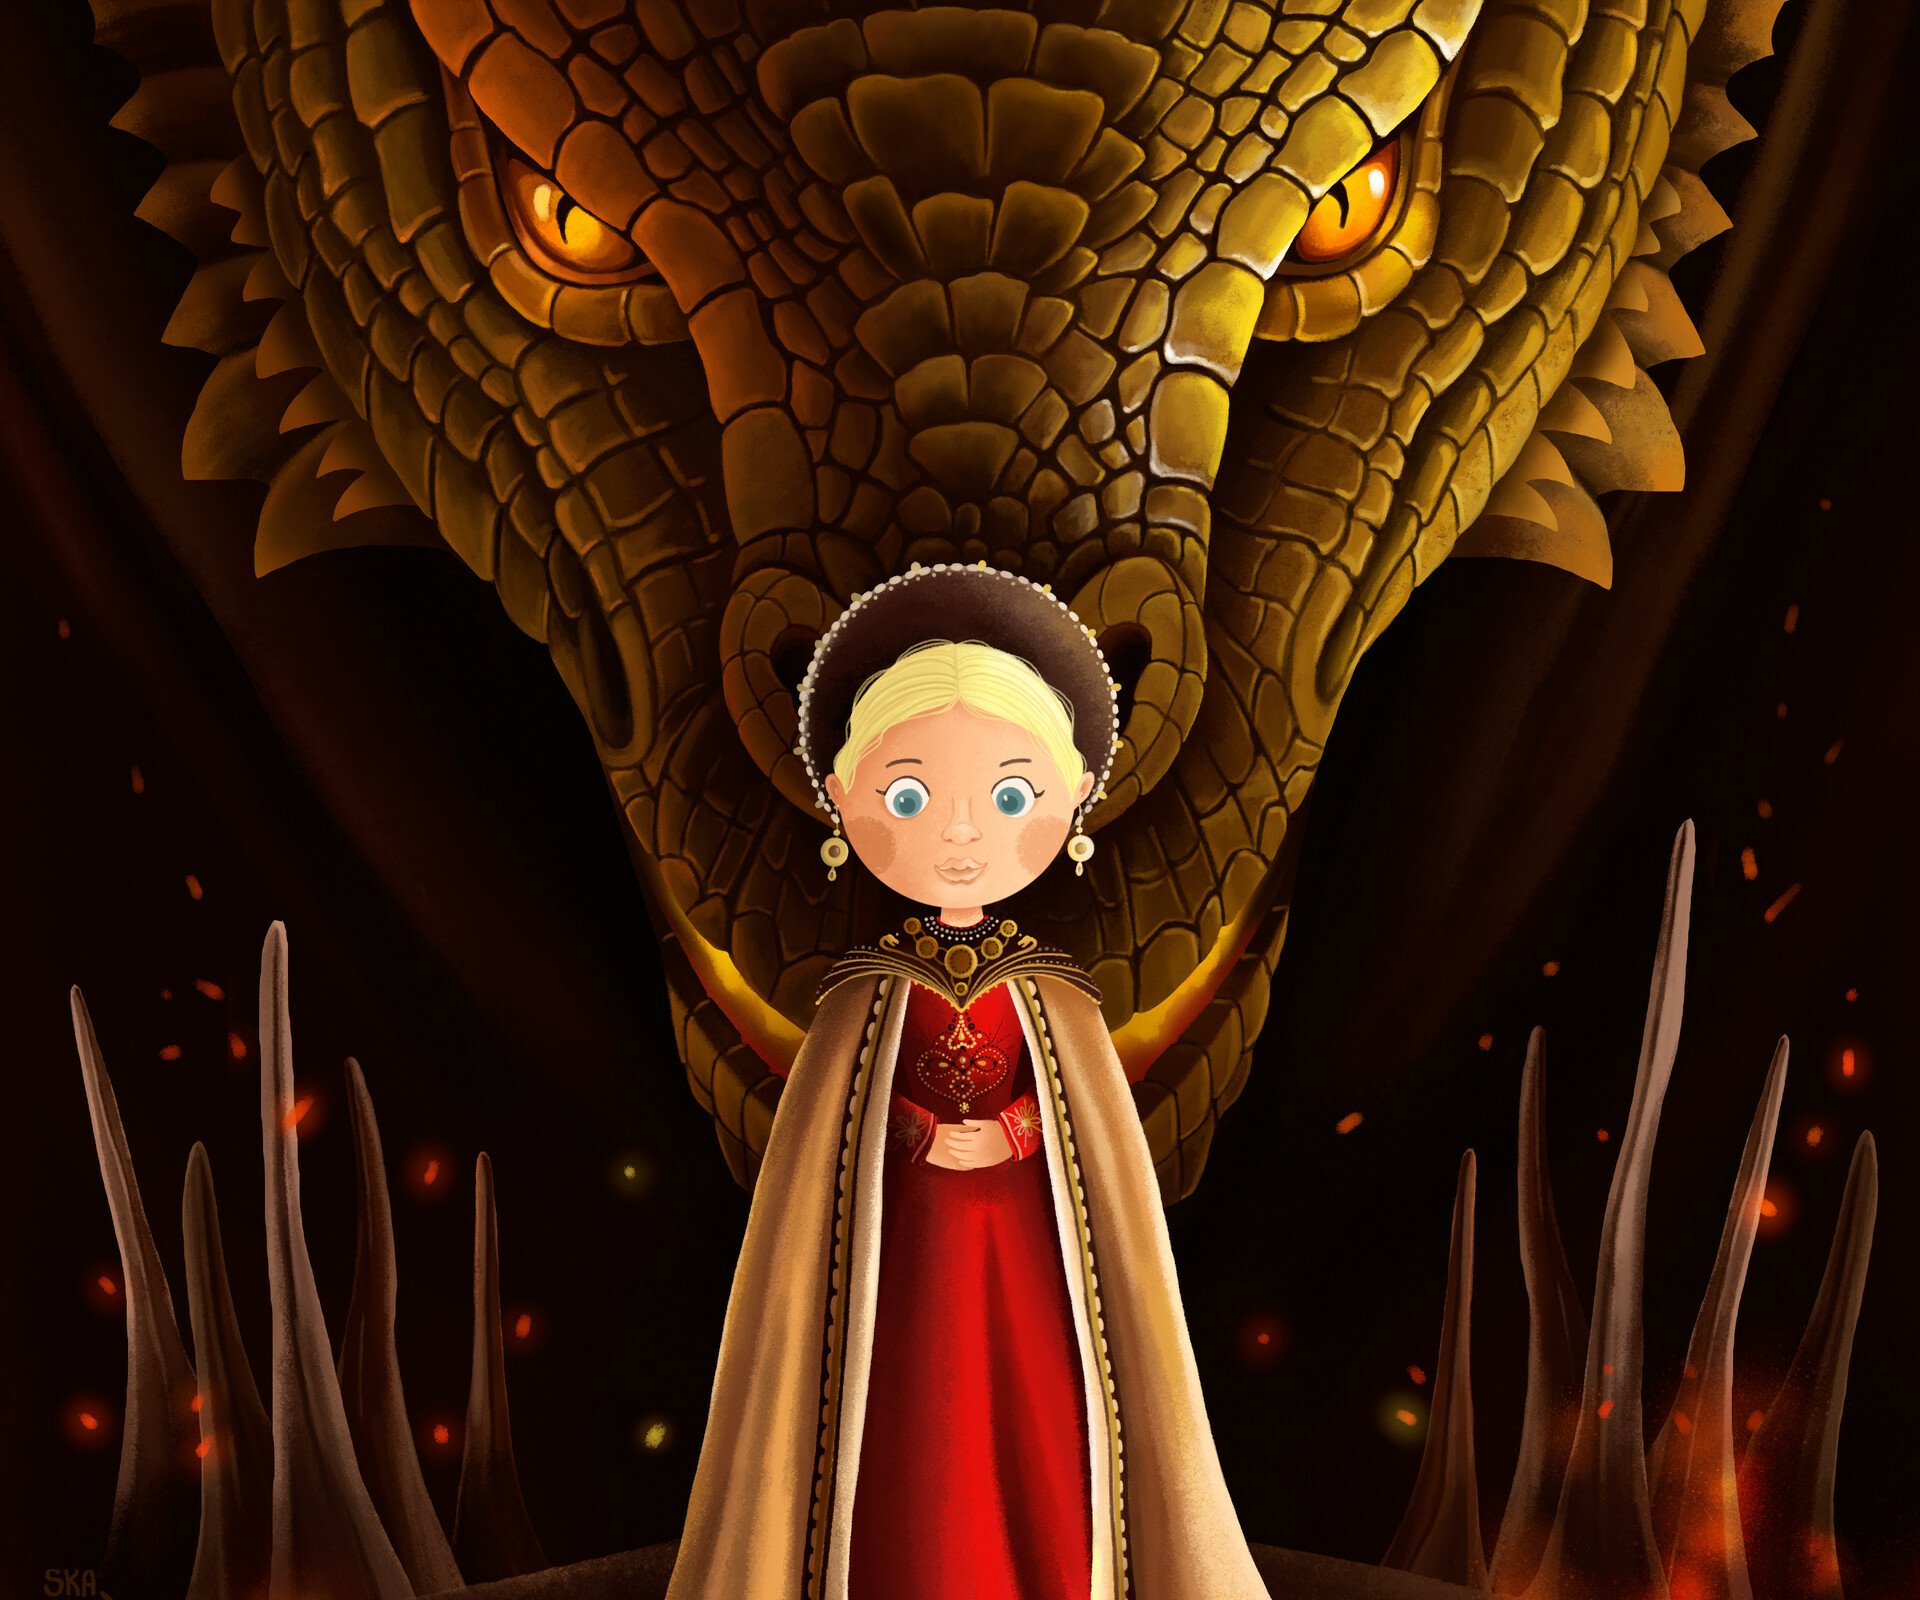 Princess of Dragonstone by Anastasia Skachko